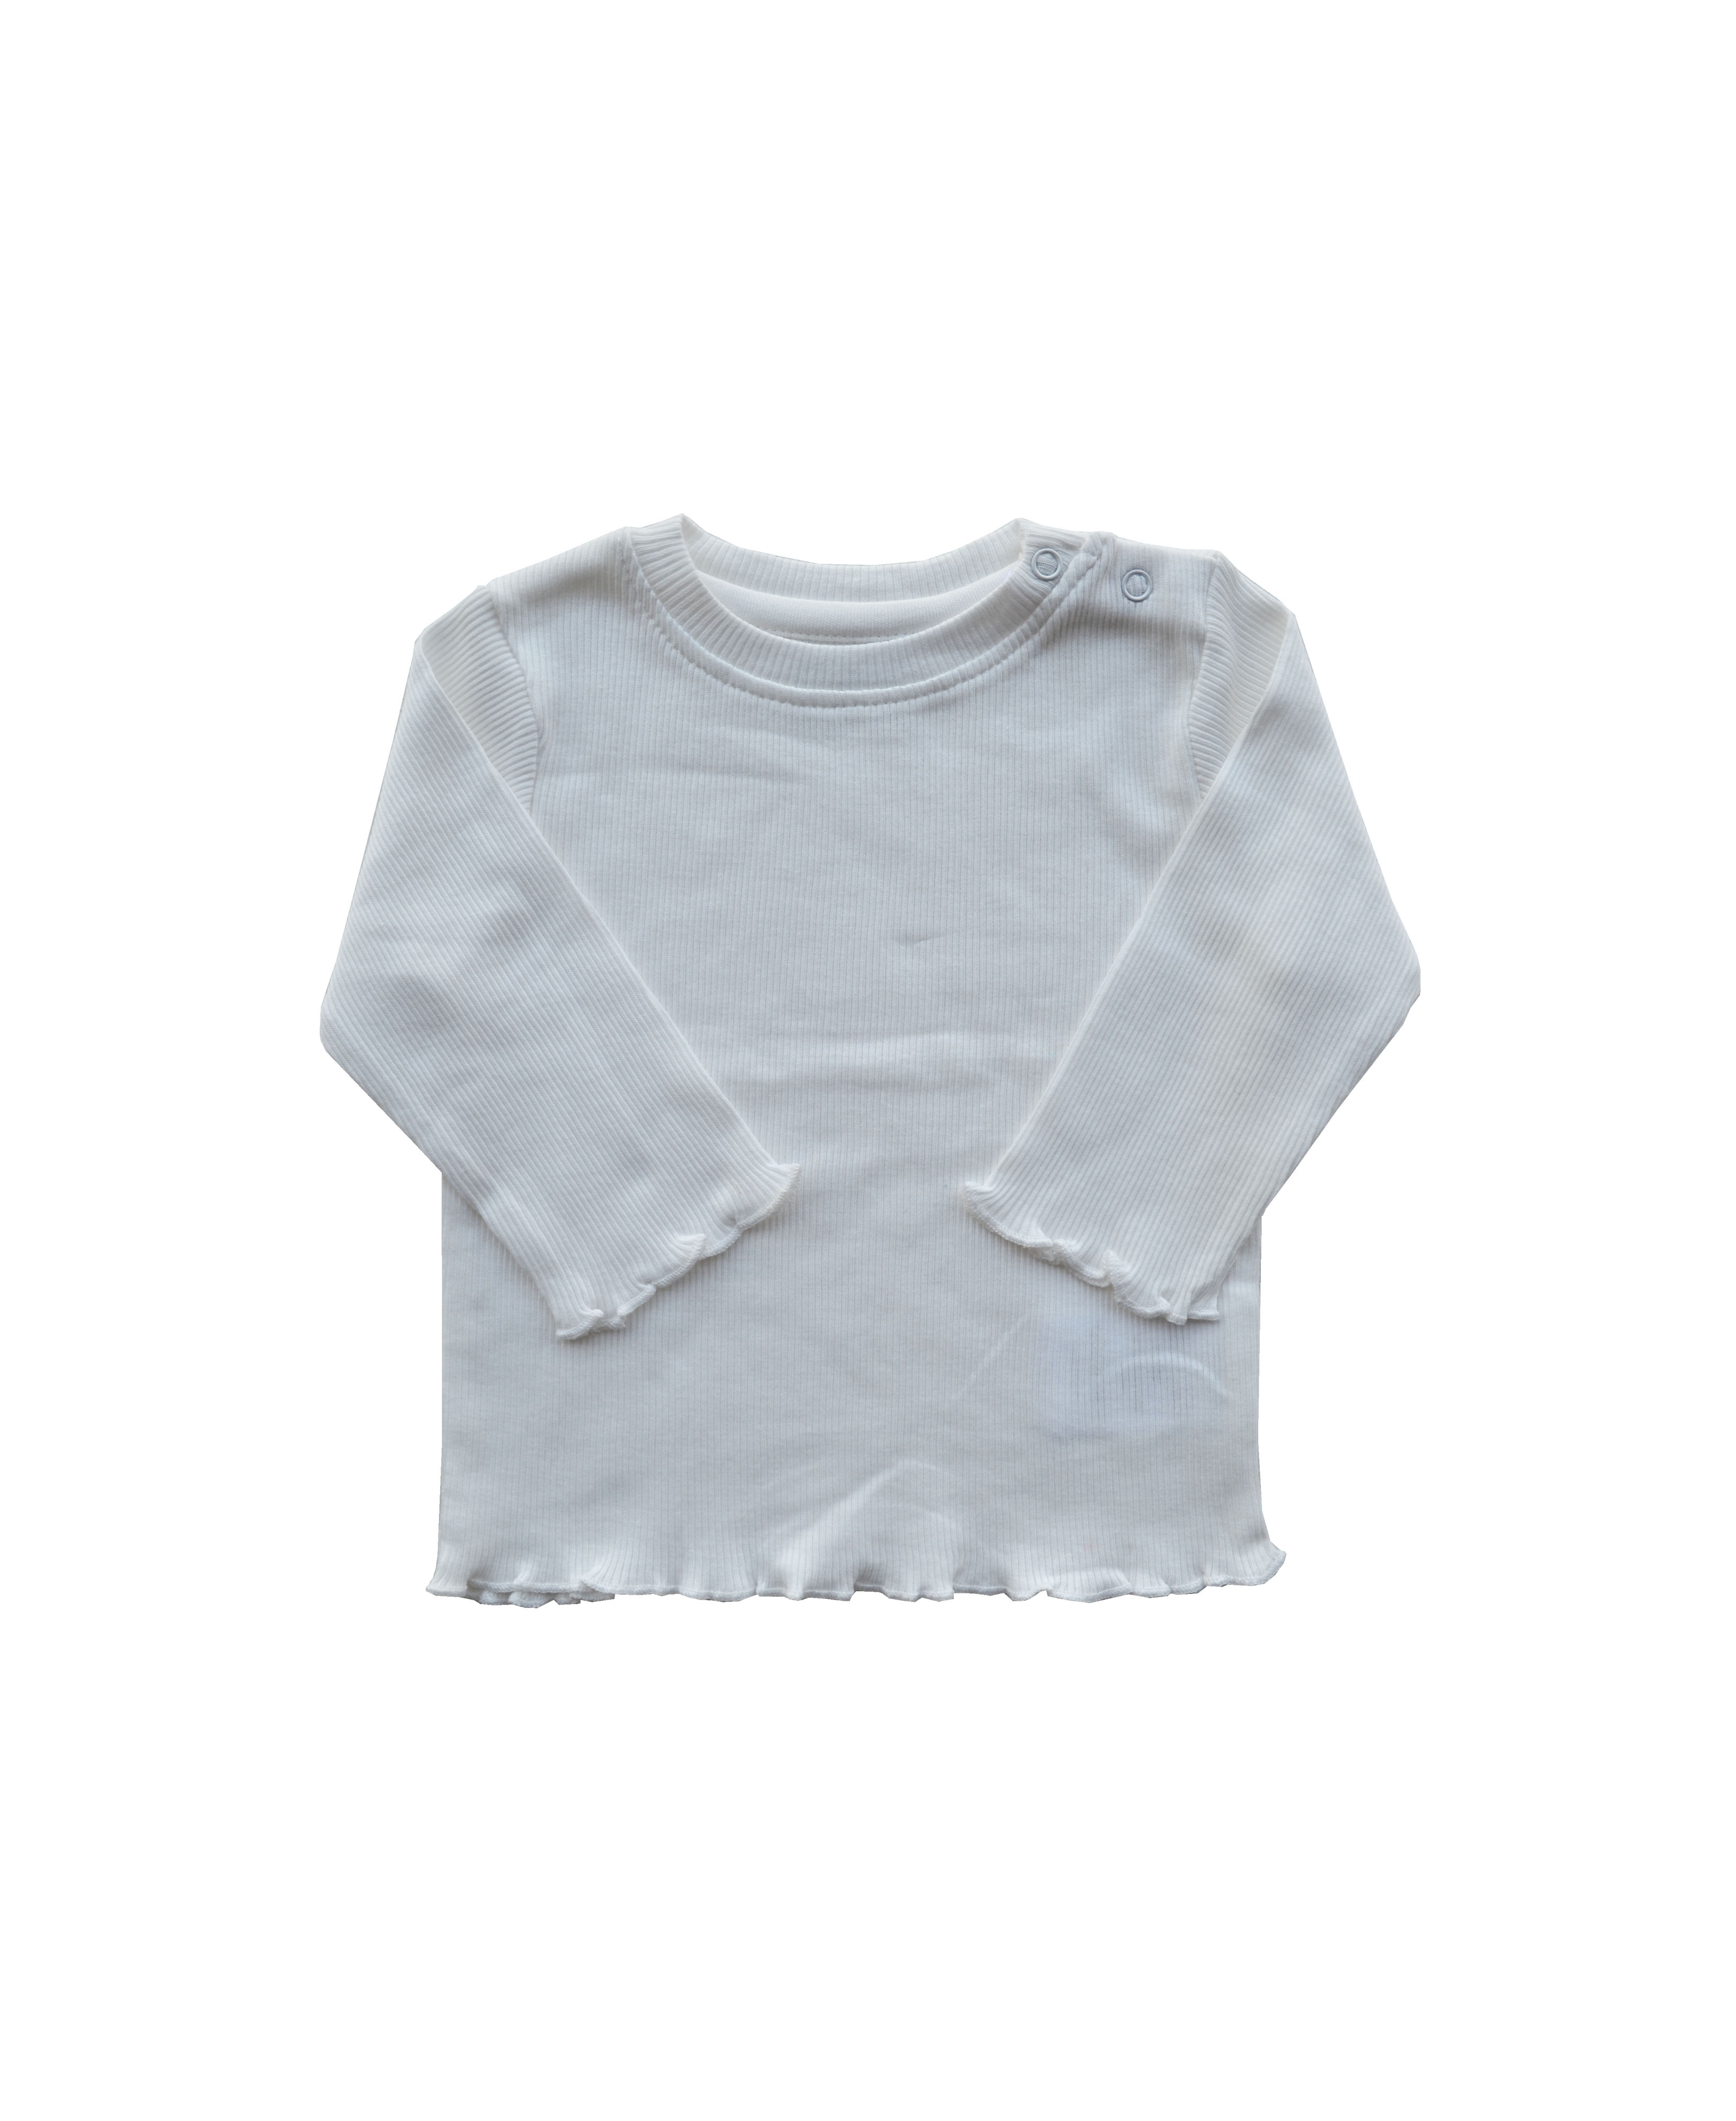 Babeez | White Long Sleeved T-shirt (100% Cotton Rib) undefined